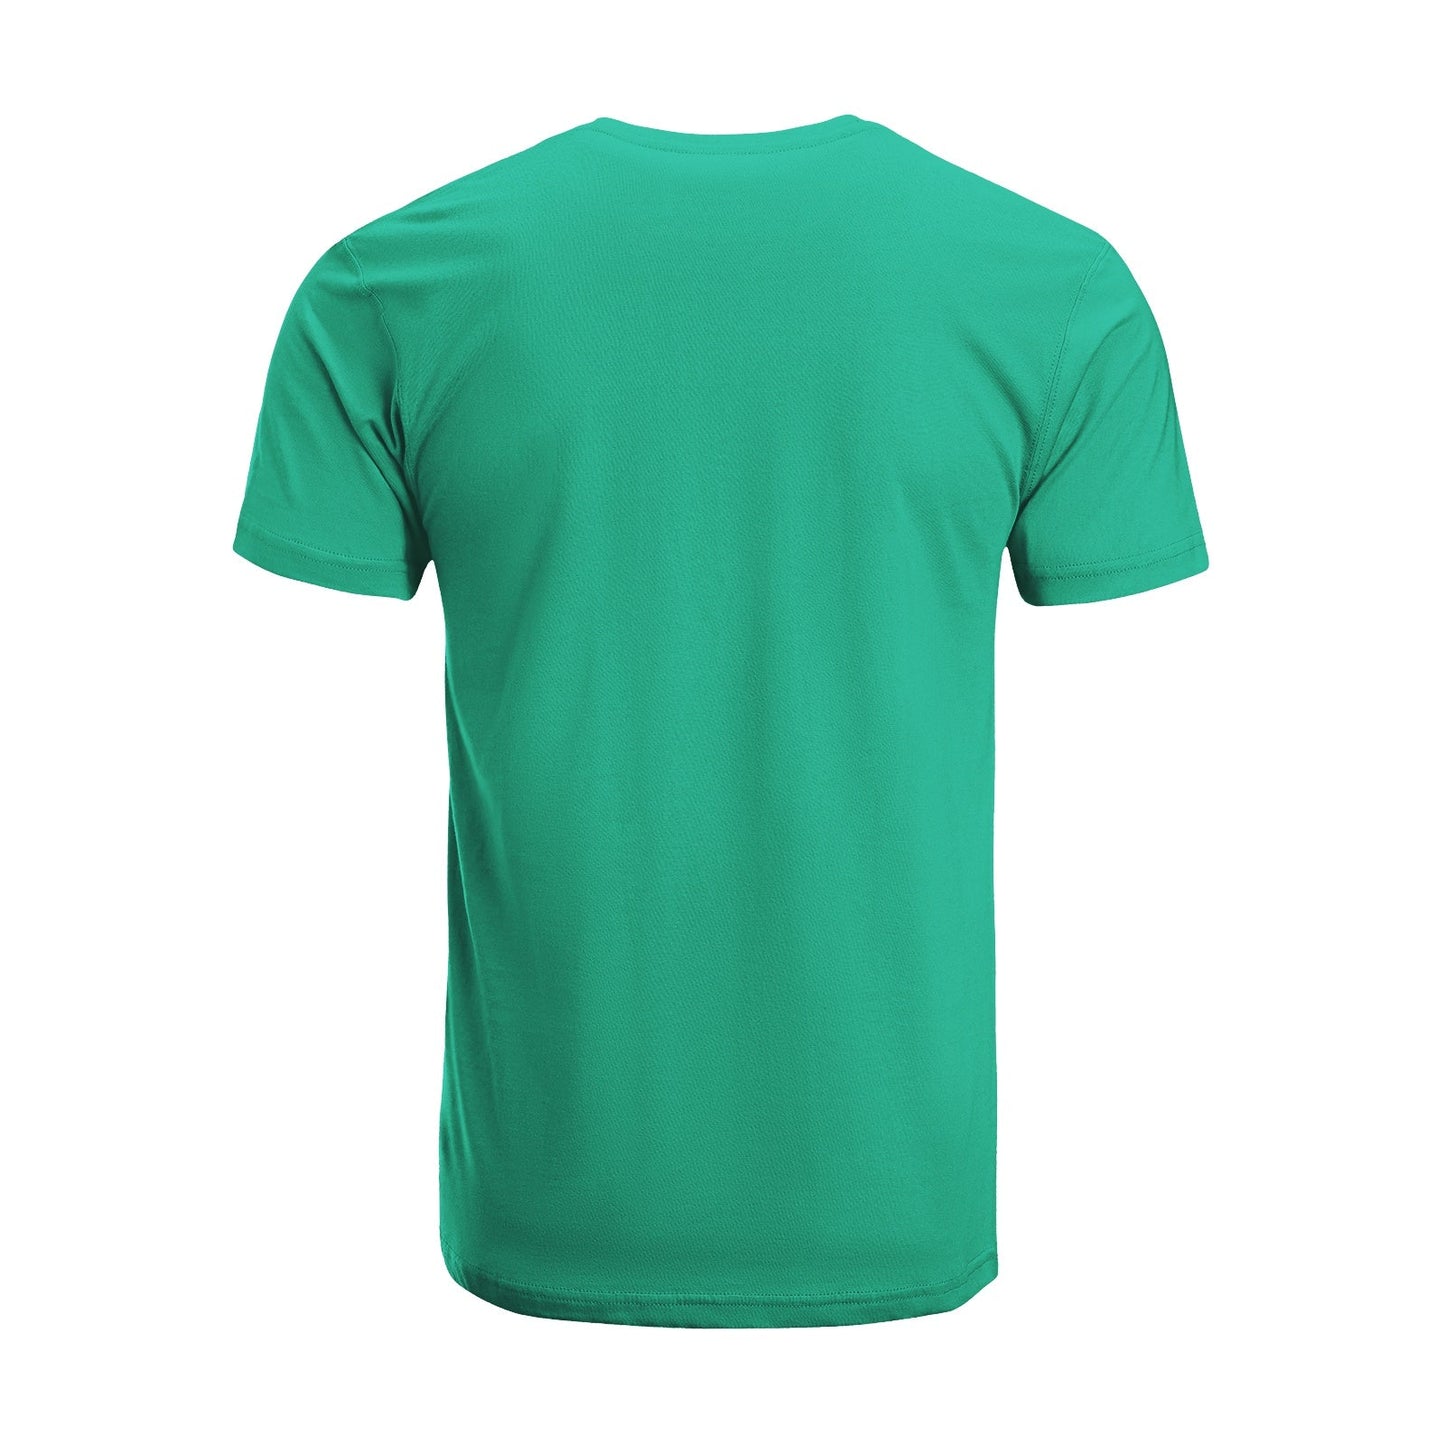 Unisex Short Sleeve Crew Neck Cotton Jersey T-Shirt MOM 27